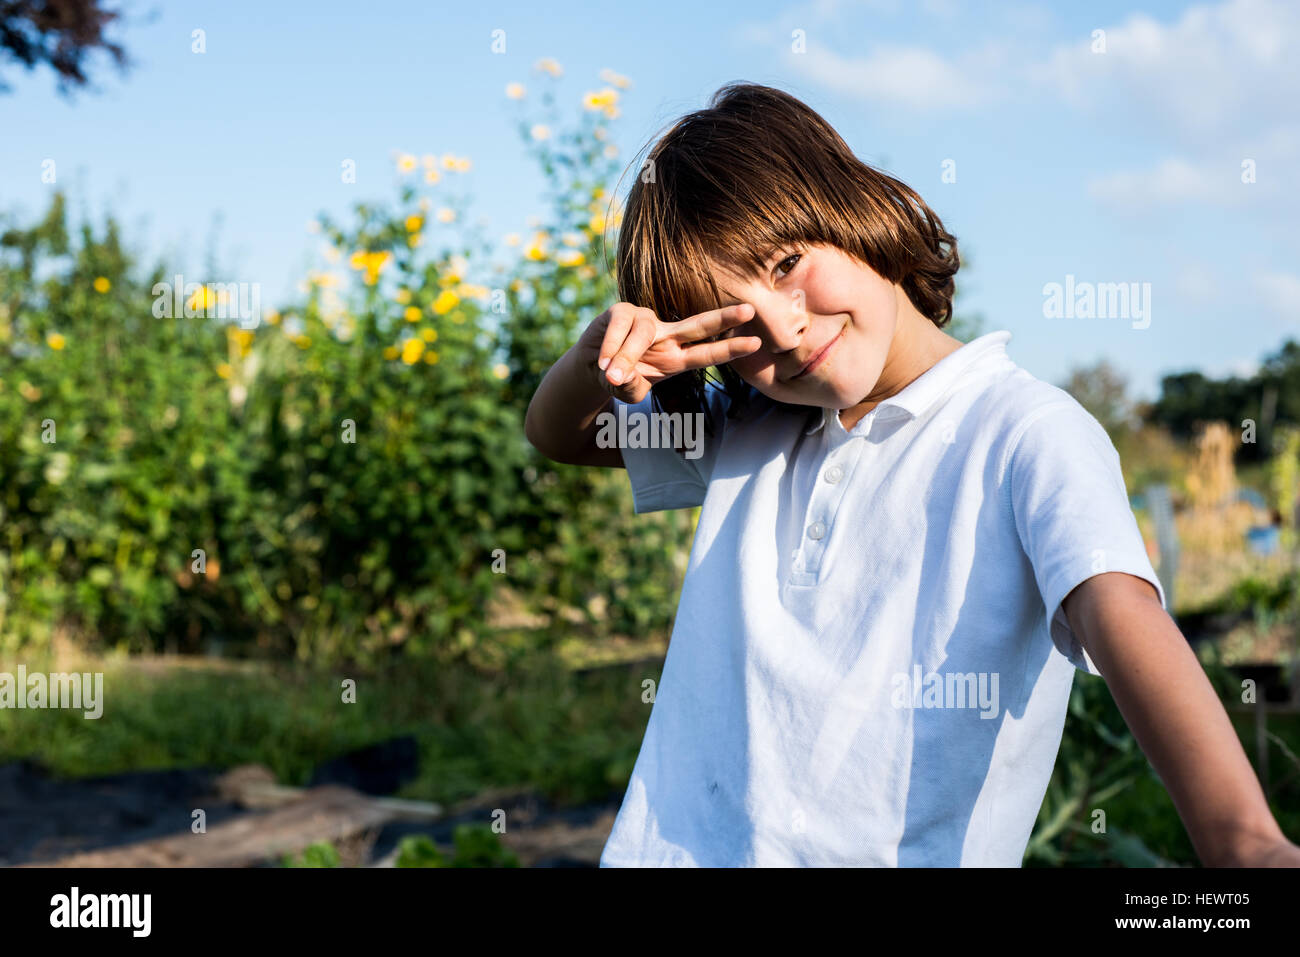 Portrait of happy boy making peace sign hand gesture dans jardin rural Banque D'Images